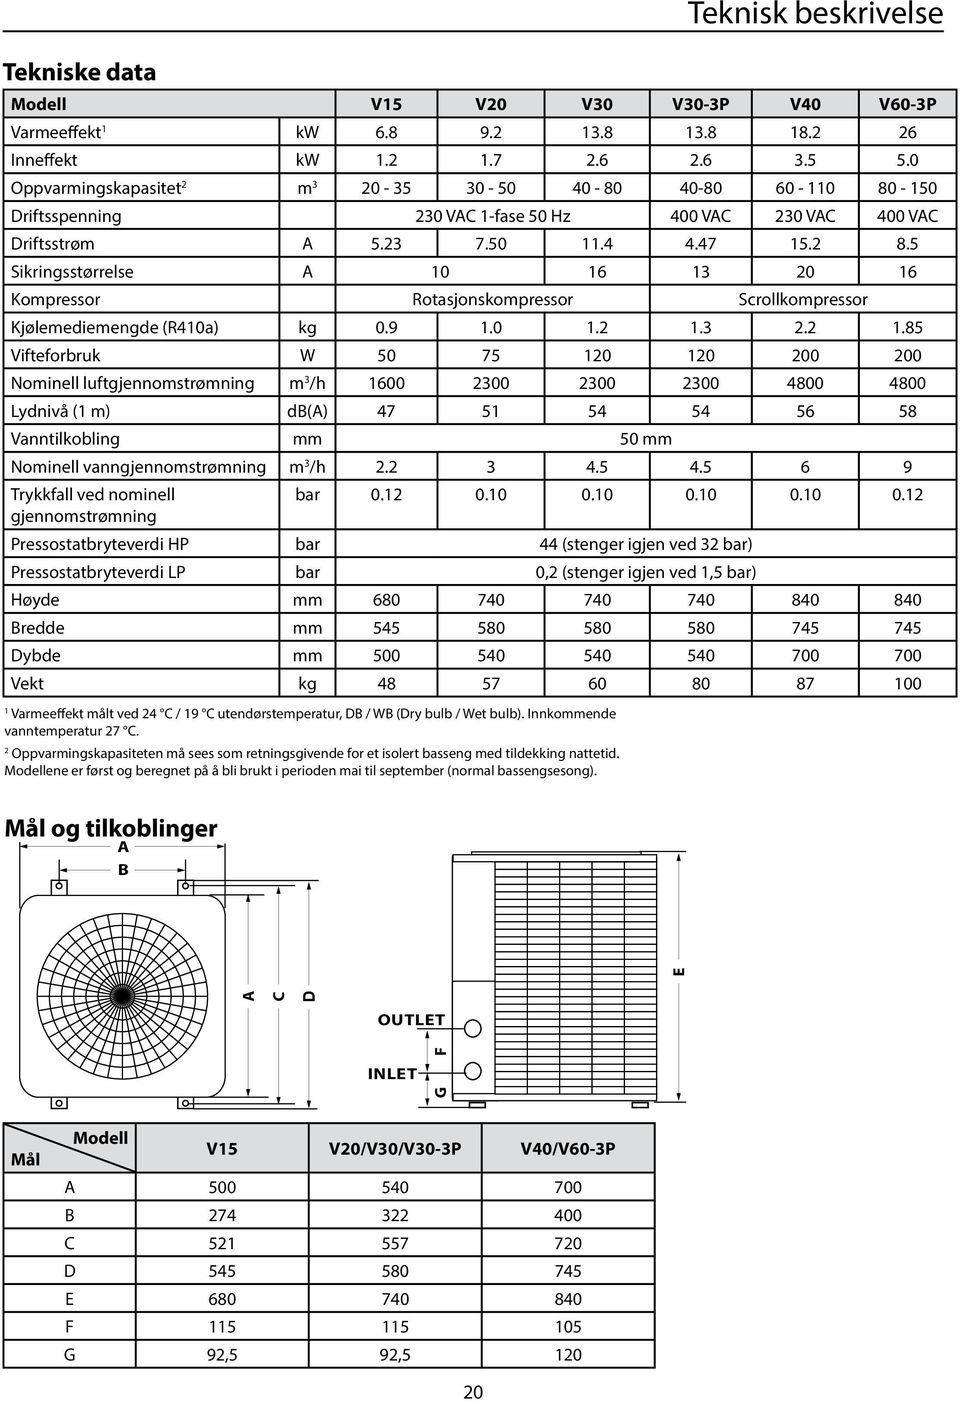 5 Sikringssørrelse A 10 16 13 20 16 Kompressor Roasjonskompressor Scrollkompressor Kjølemediemengde (R410a) kg 0.9 1.0 1.2 1.